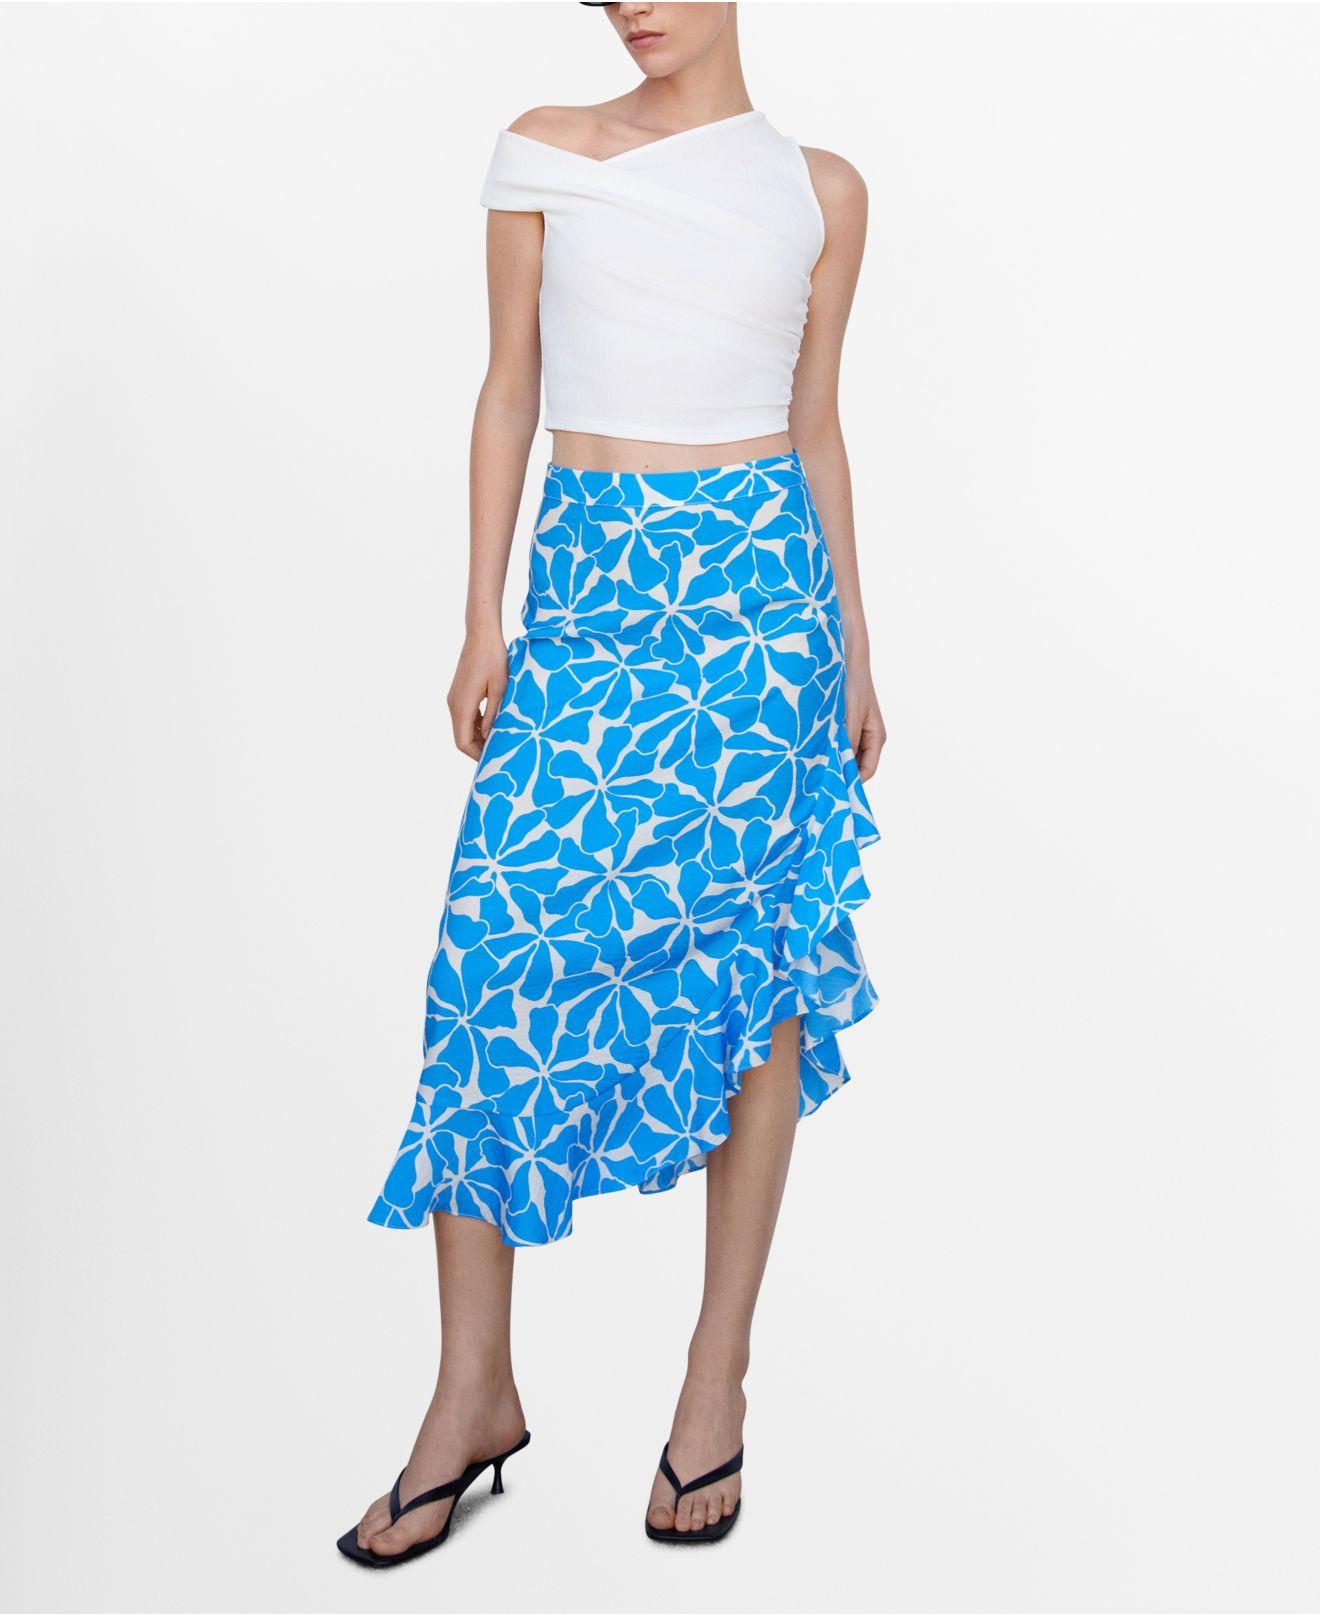 Mango Asymmetric Printed Skirt in Blue | Lyst